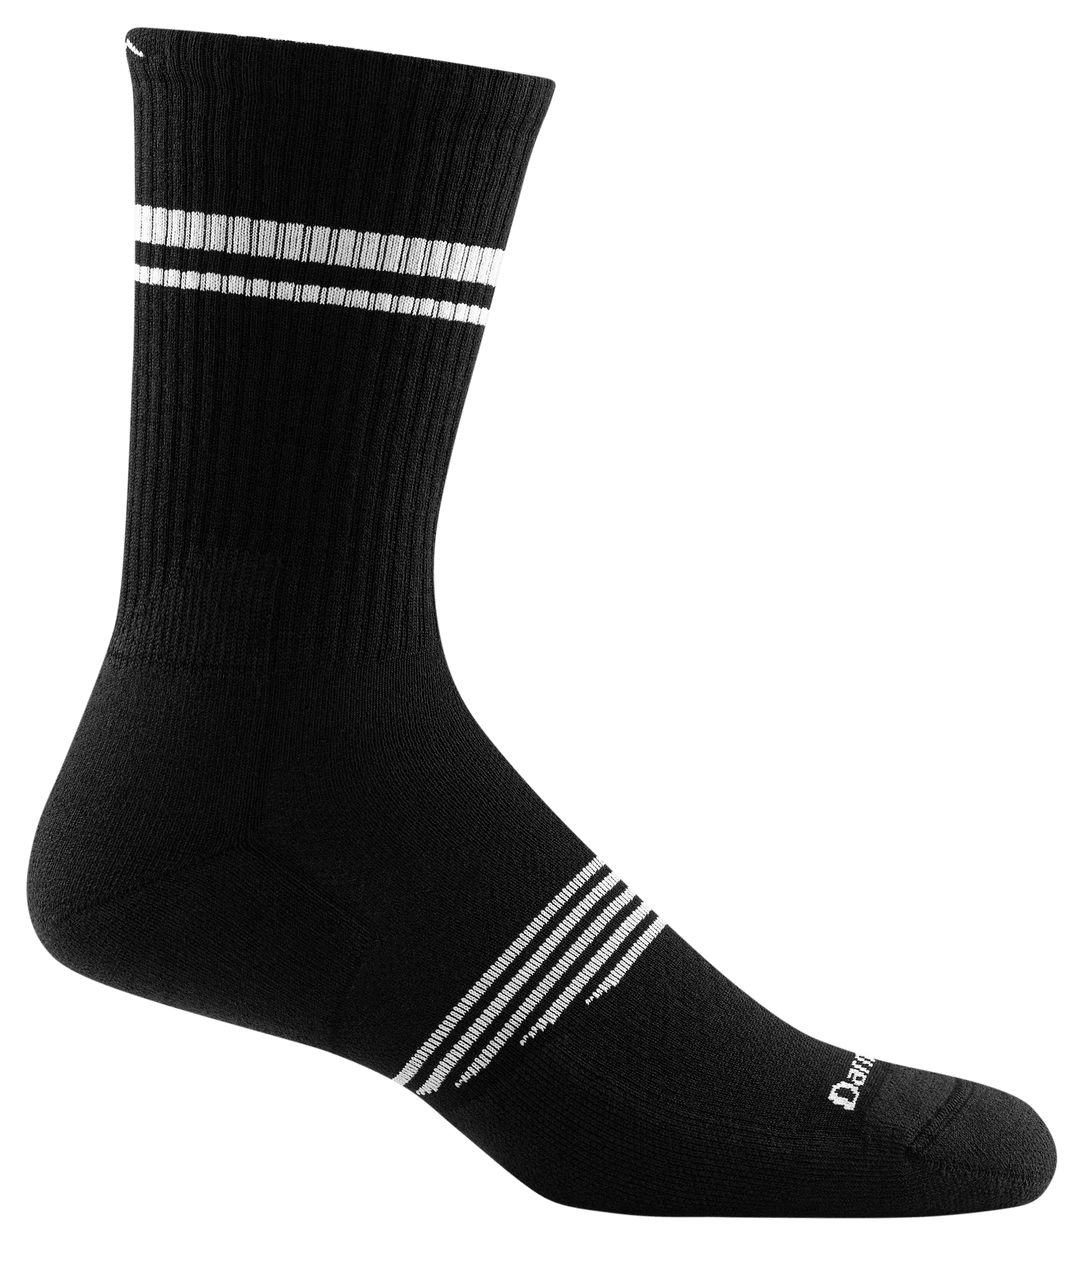 Darn Tough Athletic Crew Lightweight Sock with Cushion 1103 Socks Darn Tough Large (10-12) Black 